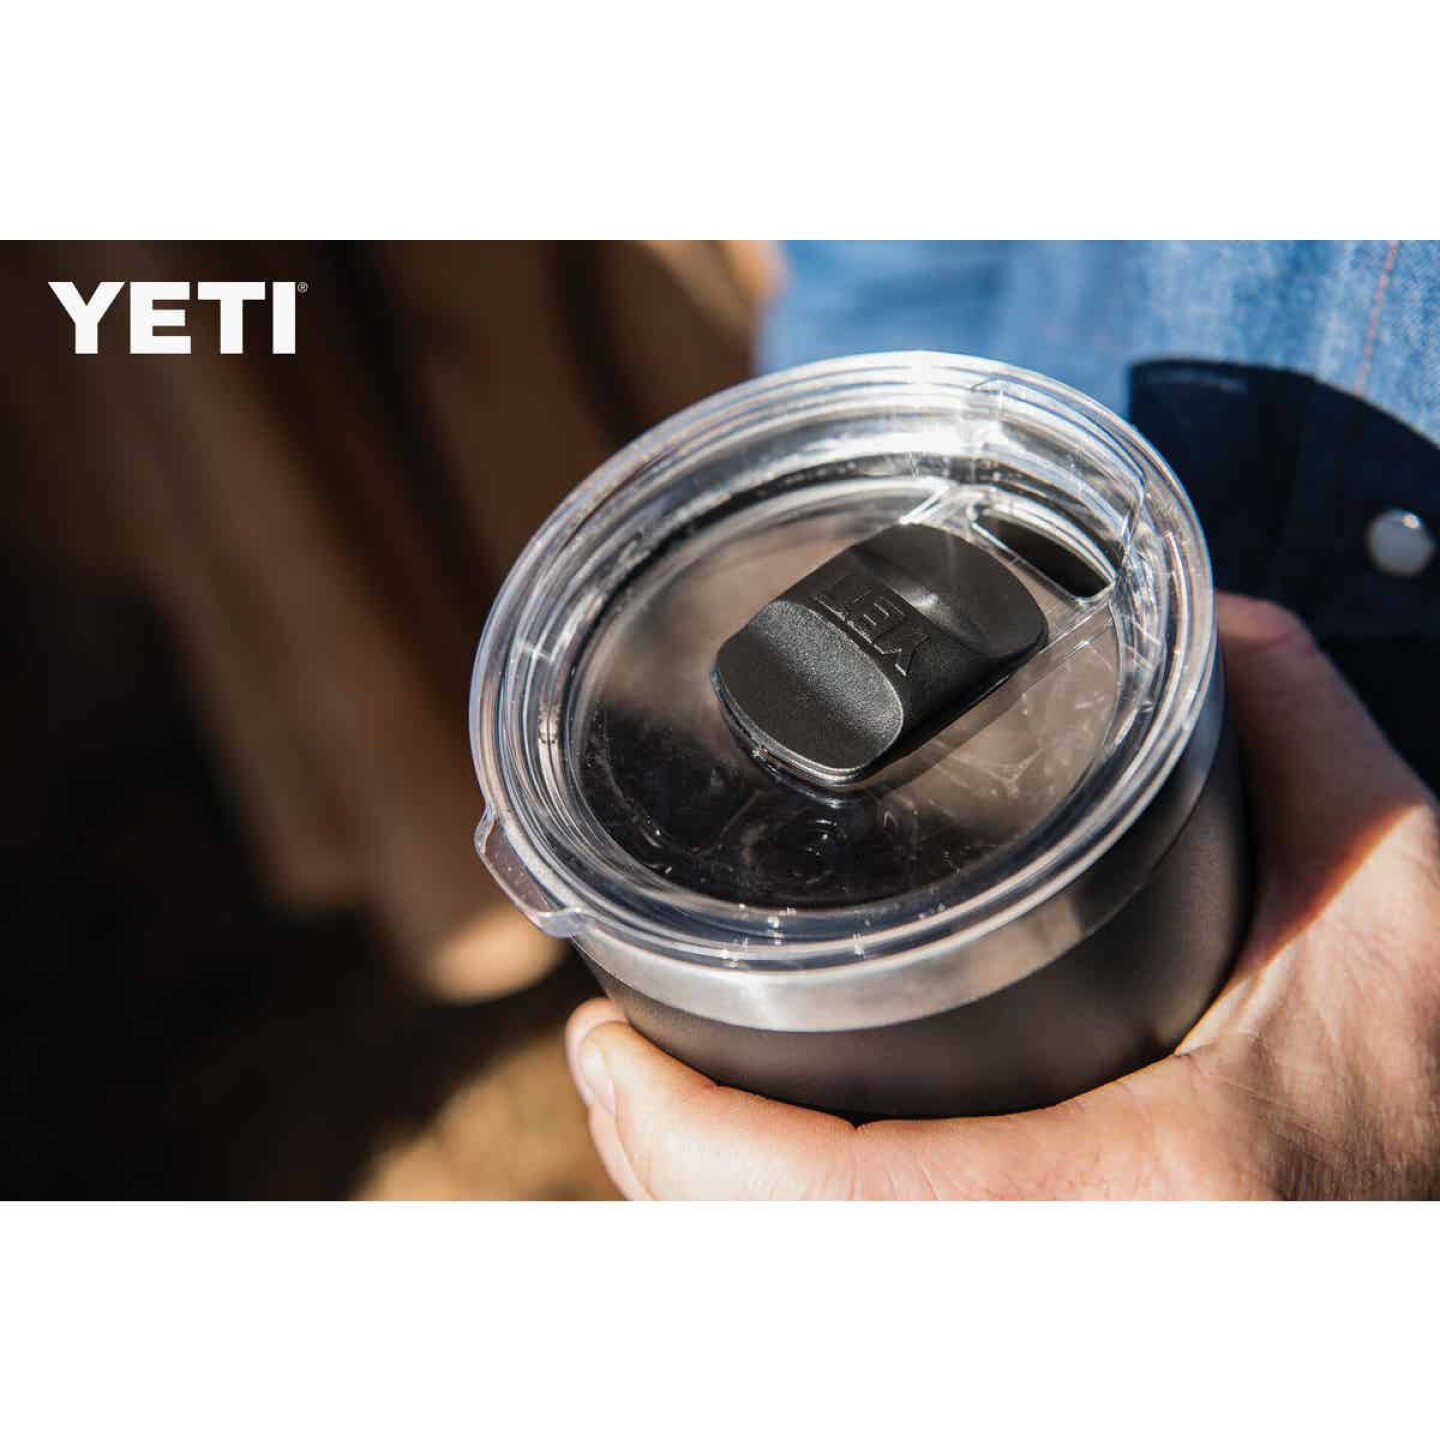 YETI Rambler 30-fl oz Stainless Steel Tumbler with MagSlider Lid, Black at